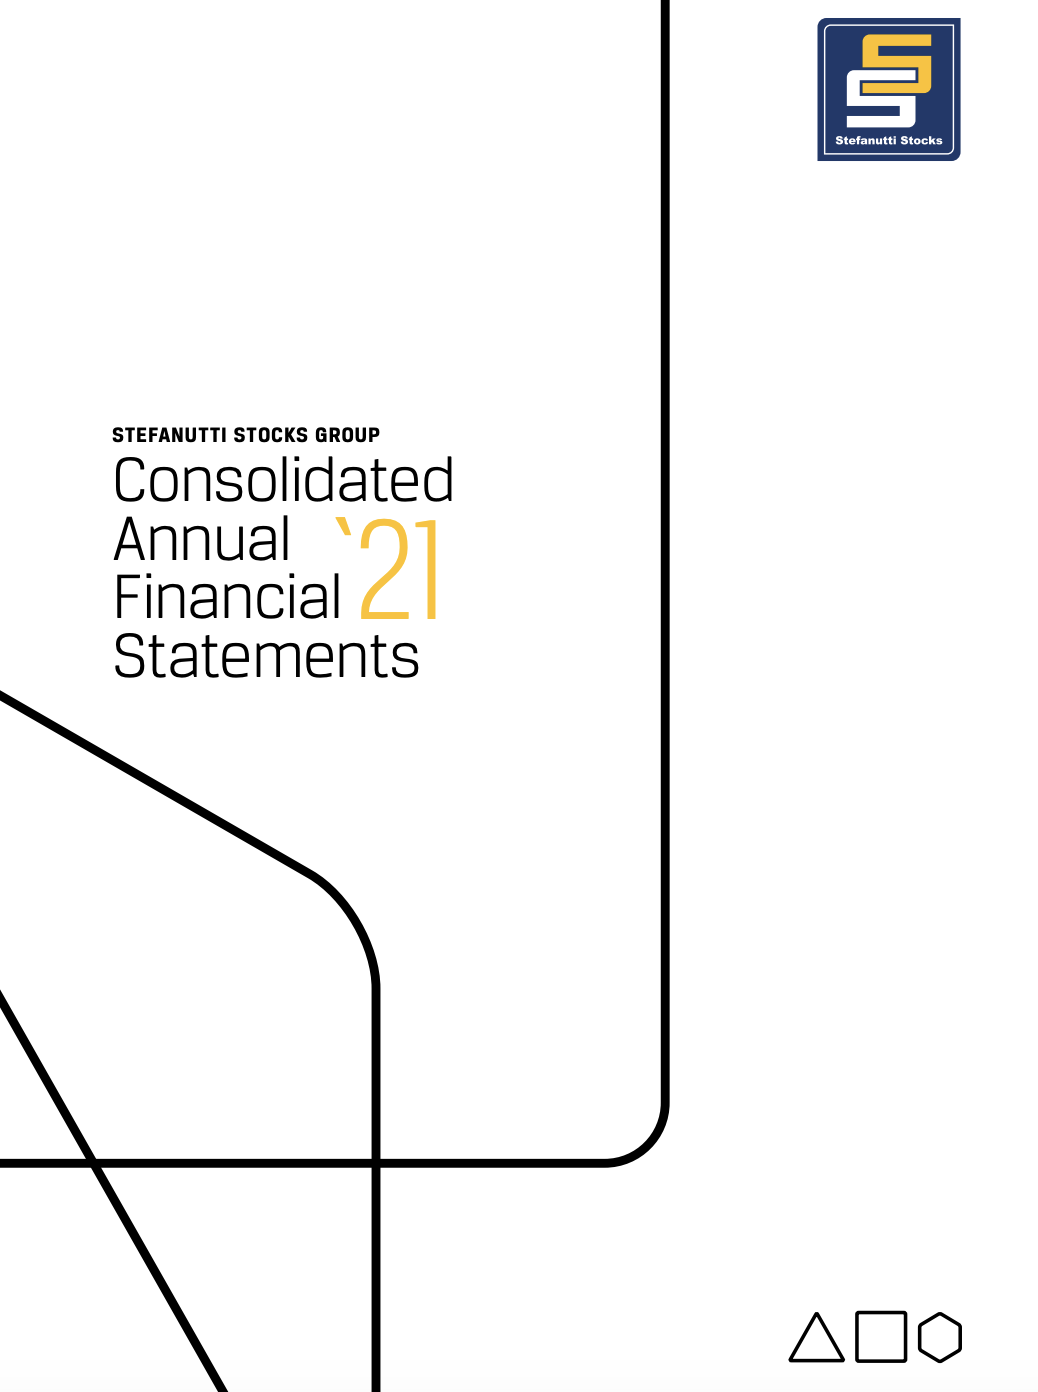 stefanutti-stocks-group-annual-financial-statements-2021